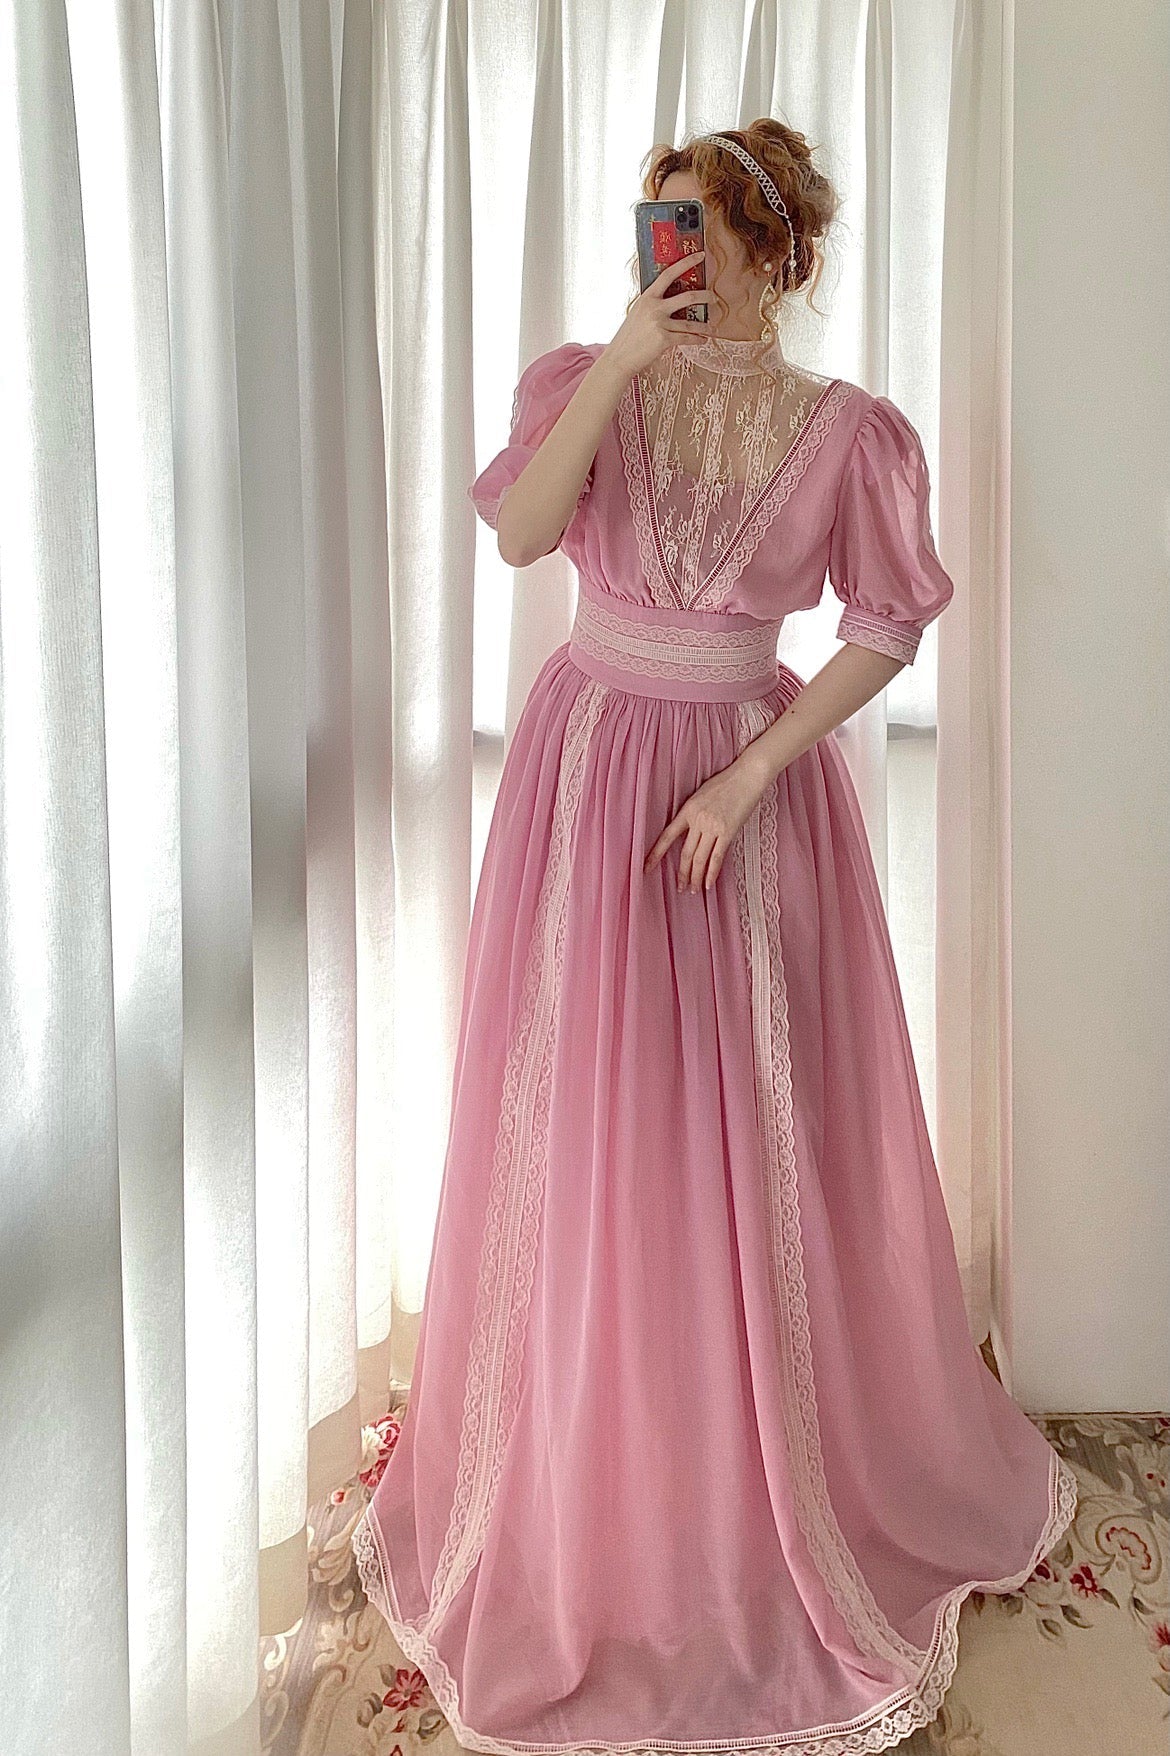 Gunne Sax Inspired Rose Pink Lace Prom Dress Plus Size - Short Sleeve Day Dress Plus Size - WonderlandByLilian